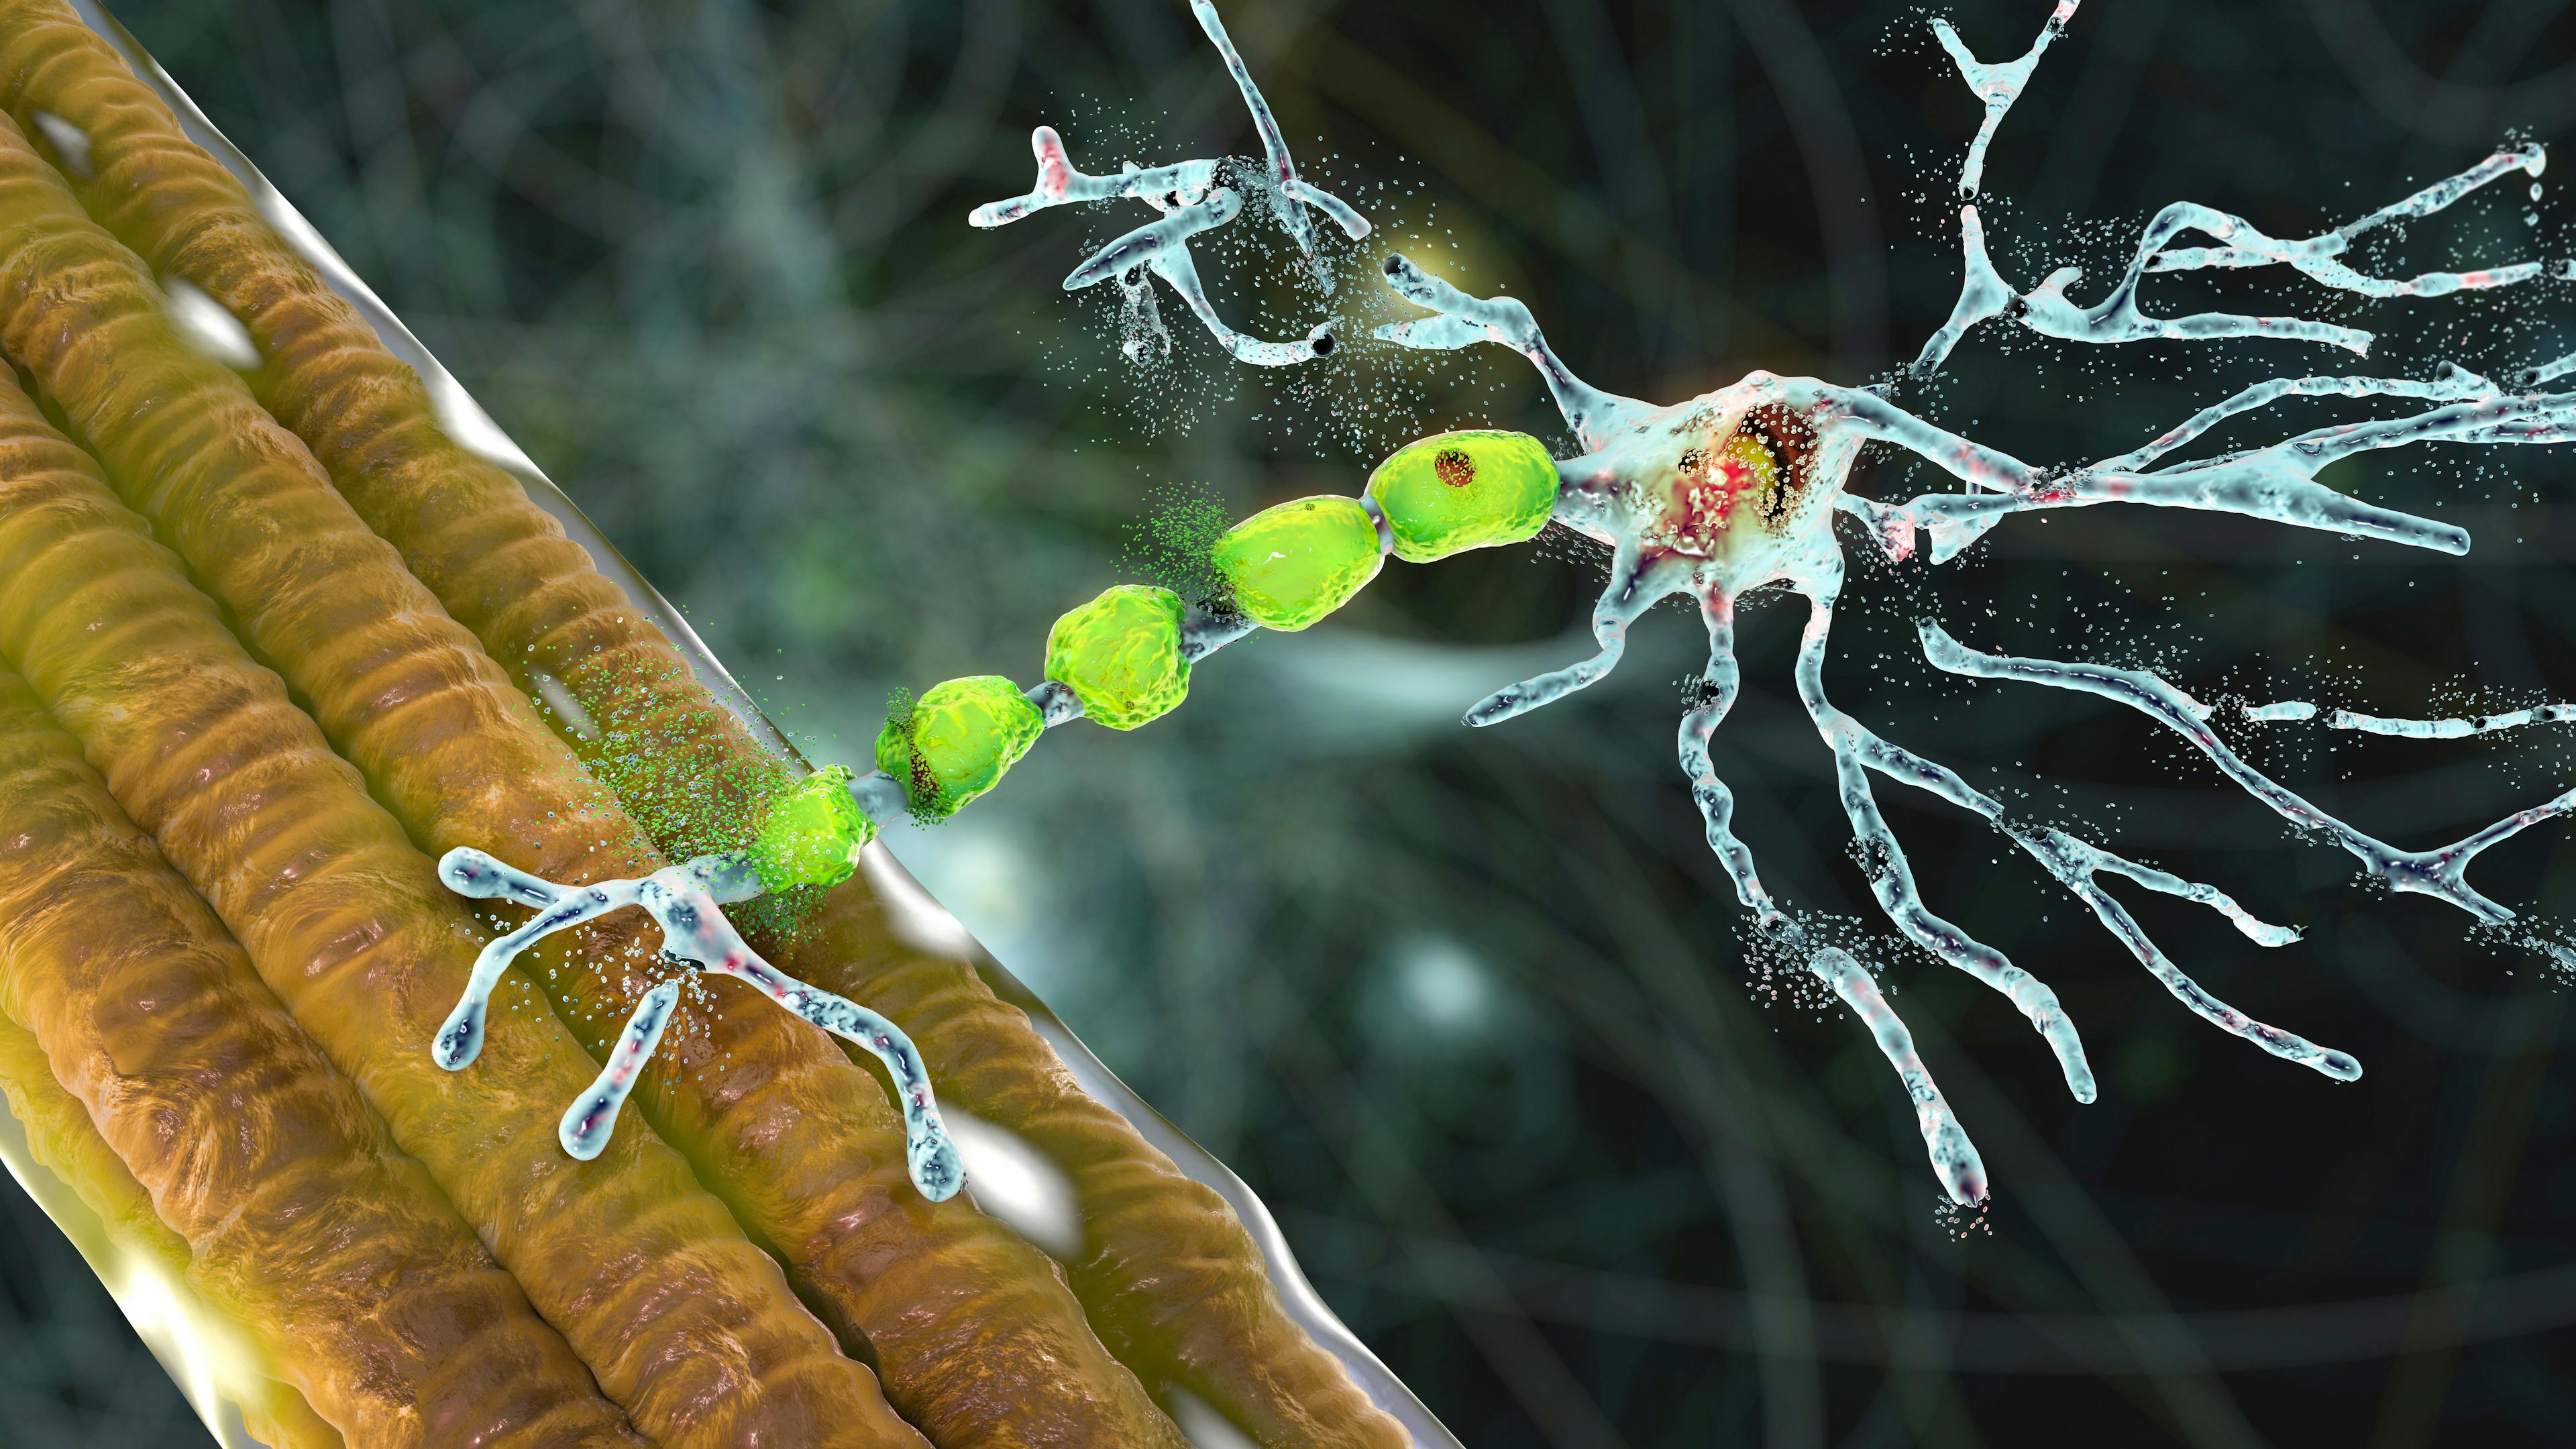 Neurodegeneration Concept | Image credit: Dr_Microbe - stock.adobe.com